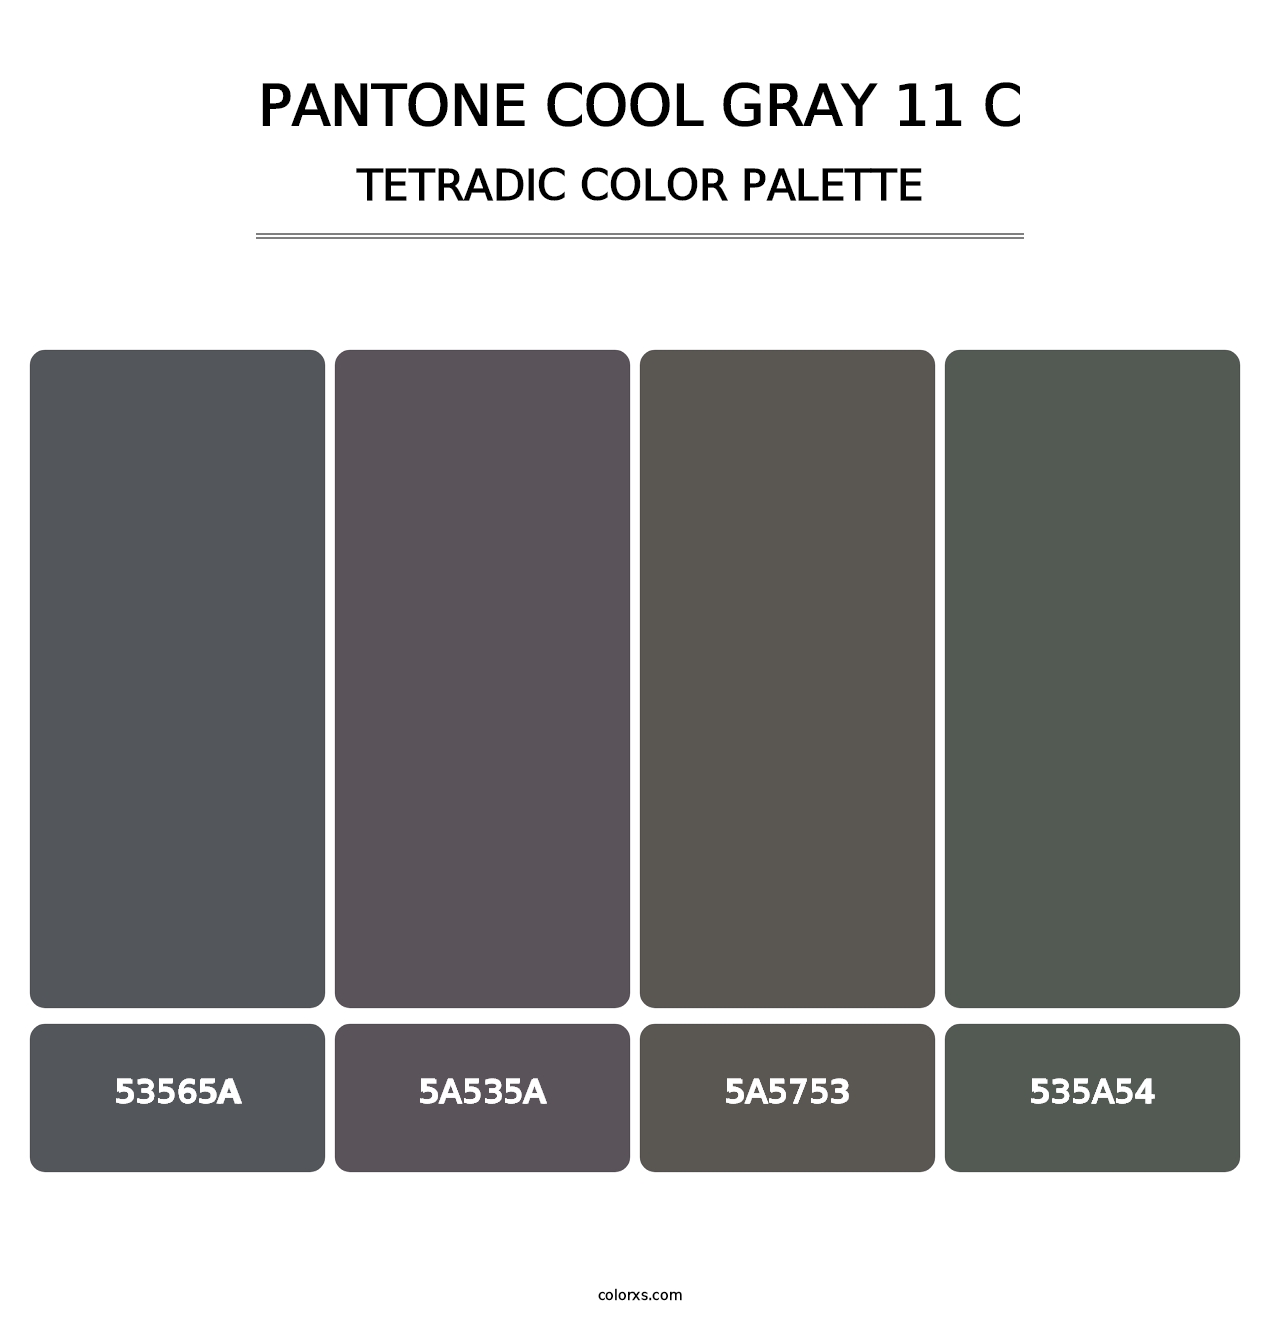 PANTONE Cool Gray 11 C - Tetradic Color Palette